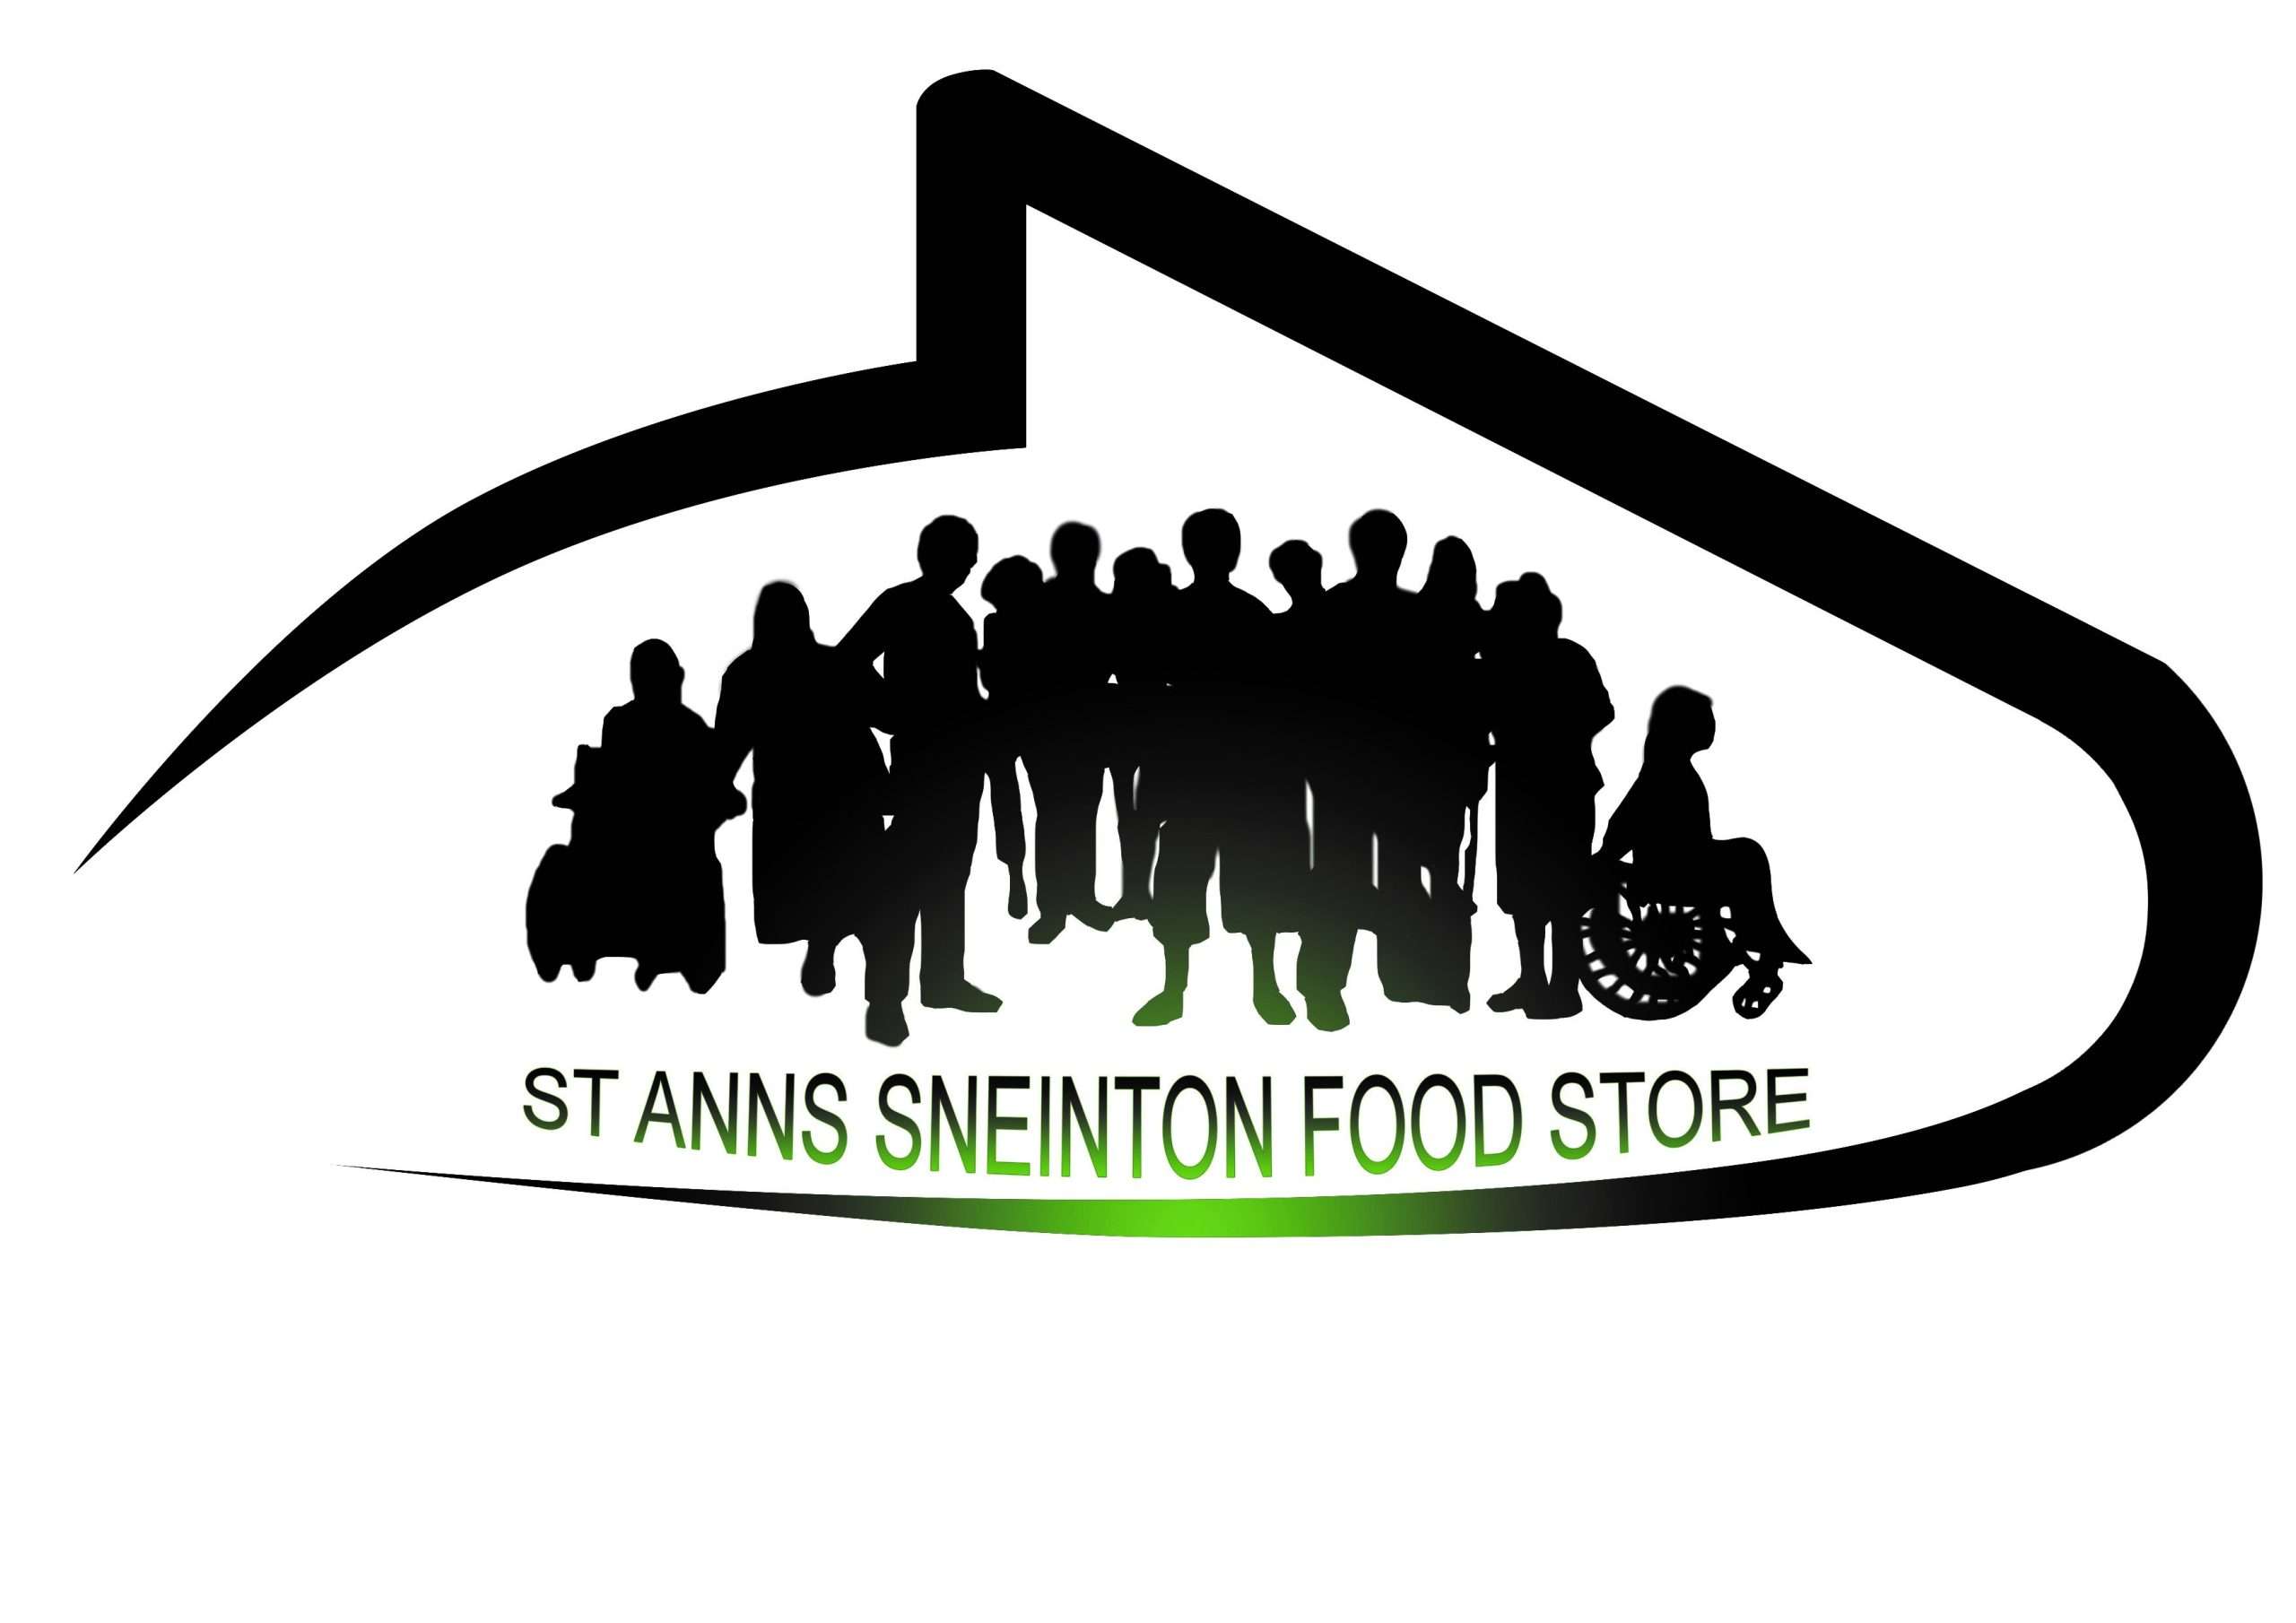 St Ann's Sneinton Food Store charity logo